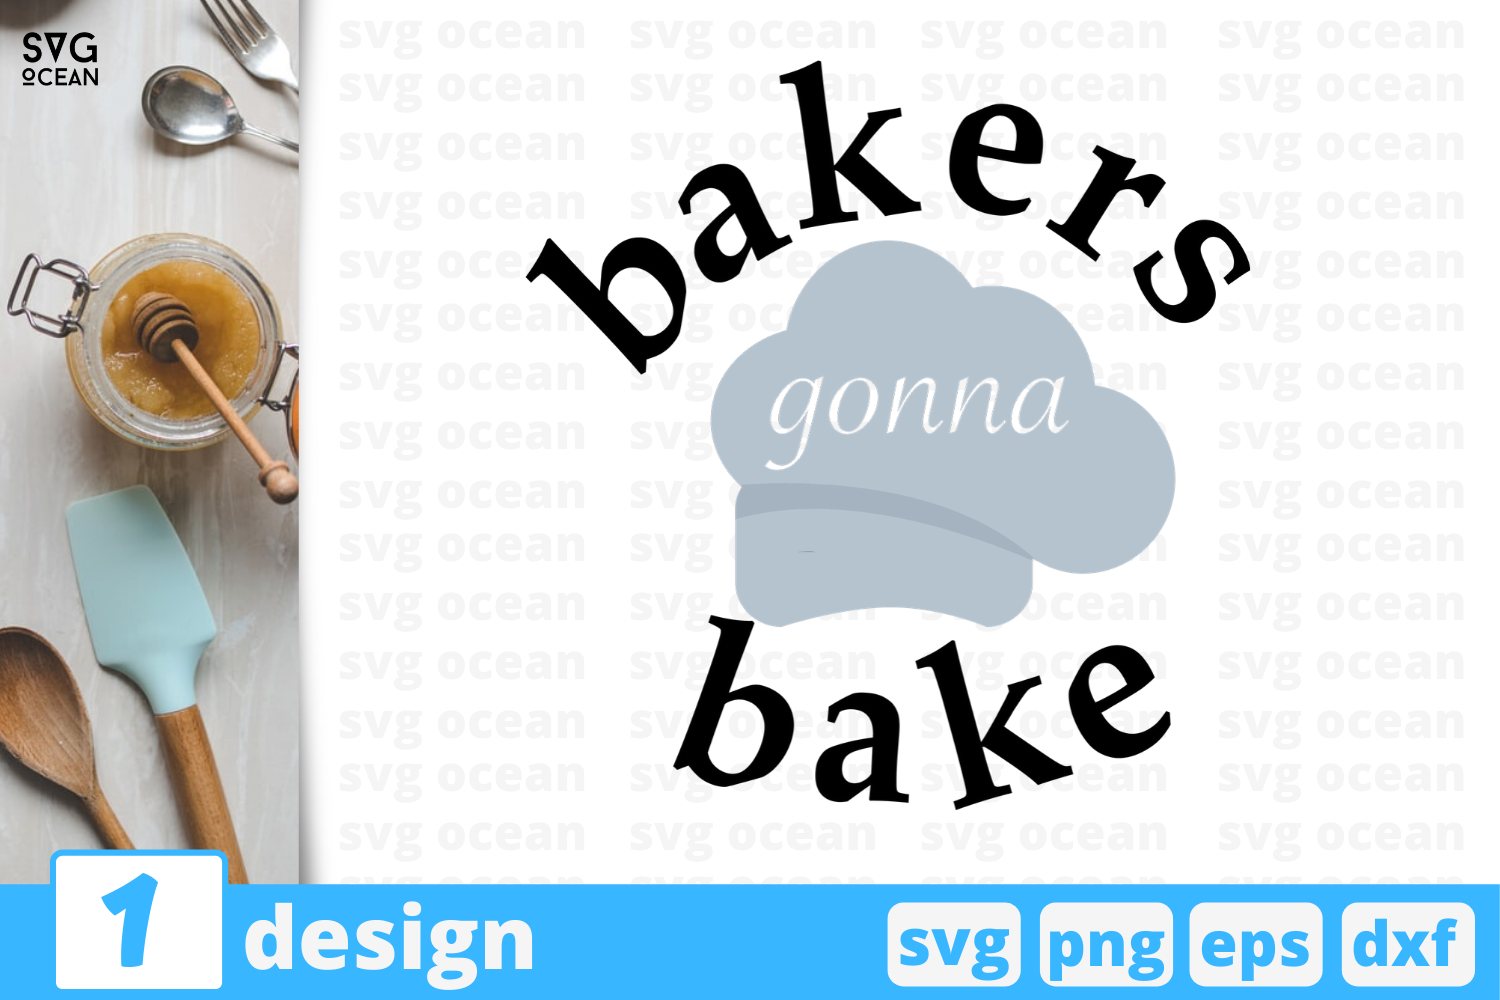 1 Bakers Gonna Bake Svg Bundle Quotes Cricut Svg By Svgocean Thehungryjpeg Com